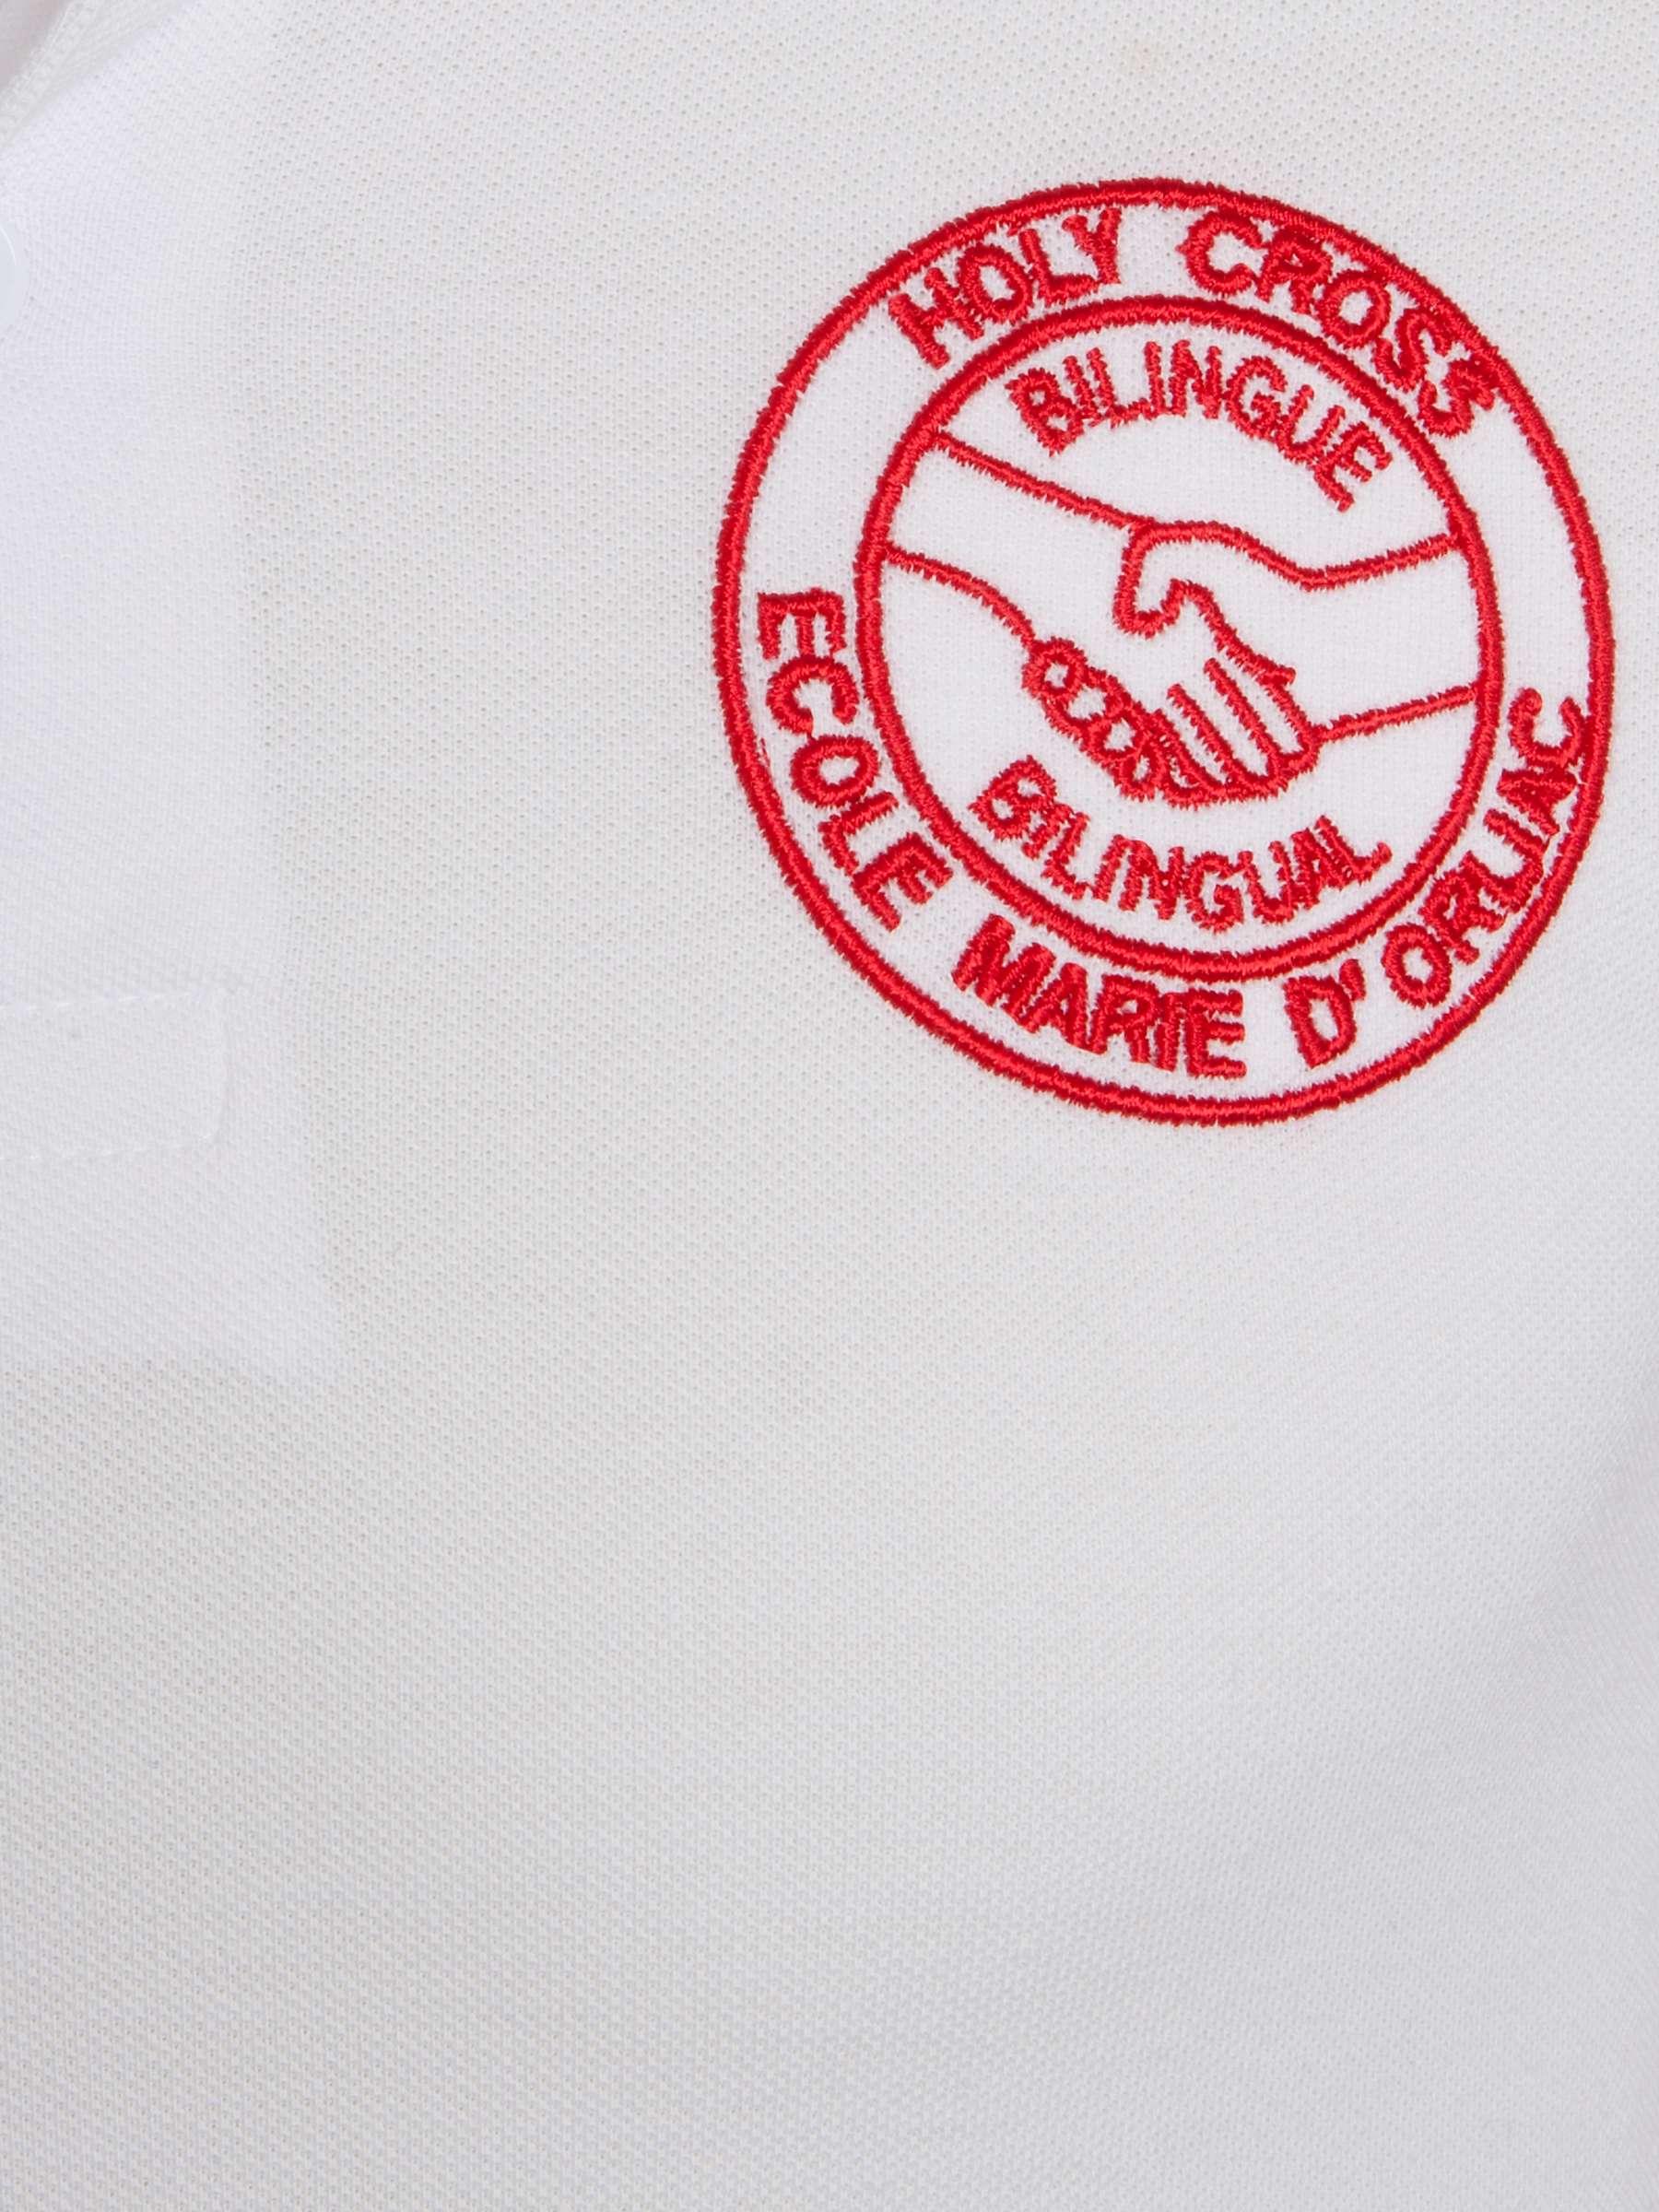 Buy Bilingue/Bilingual Stream of L'Ecole Marie D'Orliac & Holy Cross School Long Sleeved Eco-Polo Shirt Online at johnlewis.com